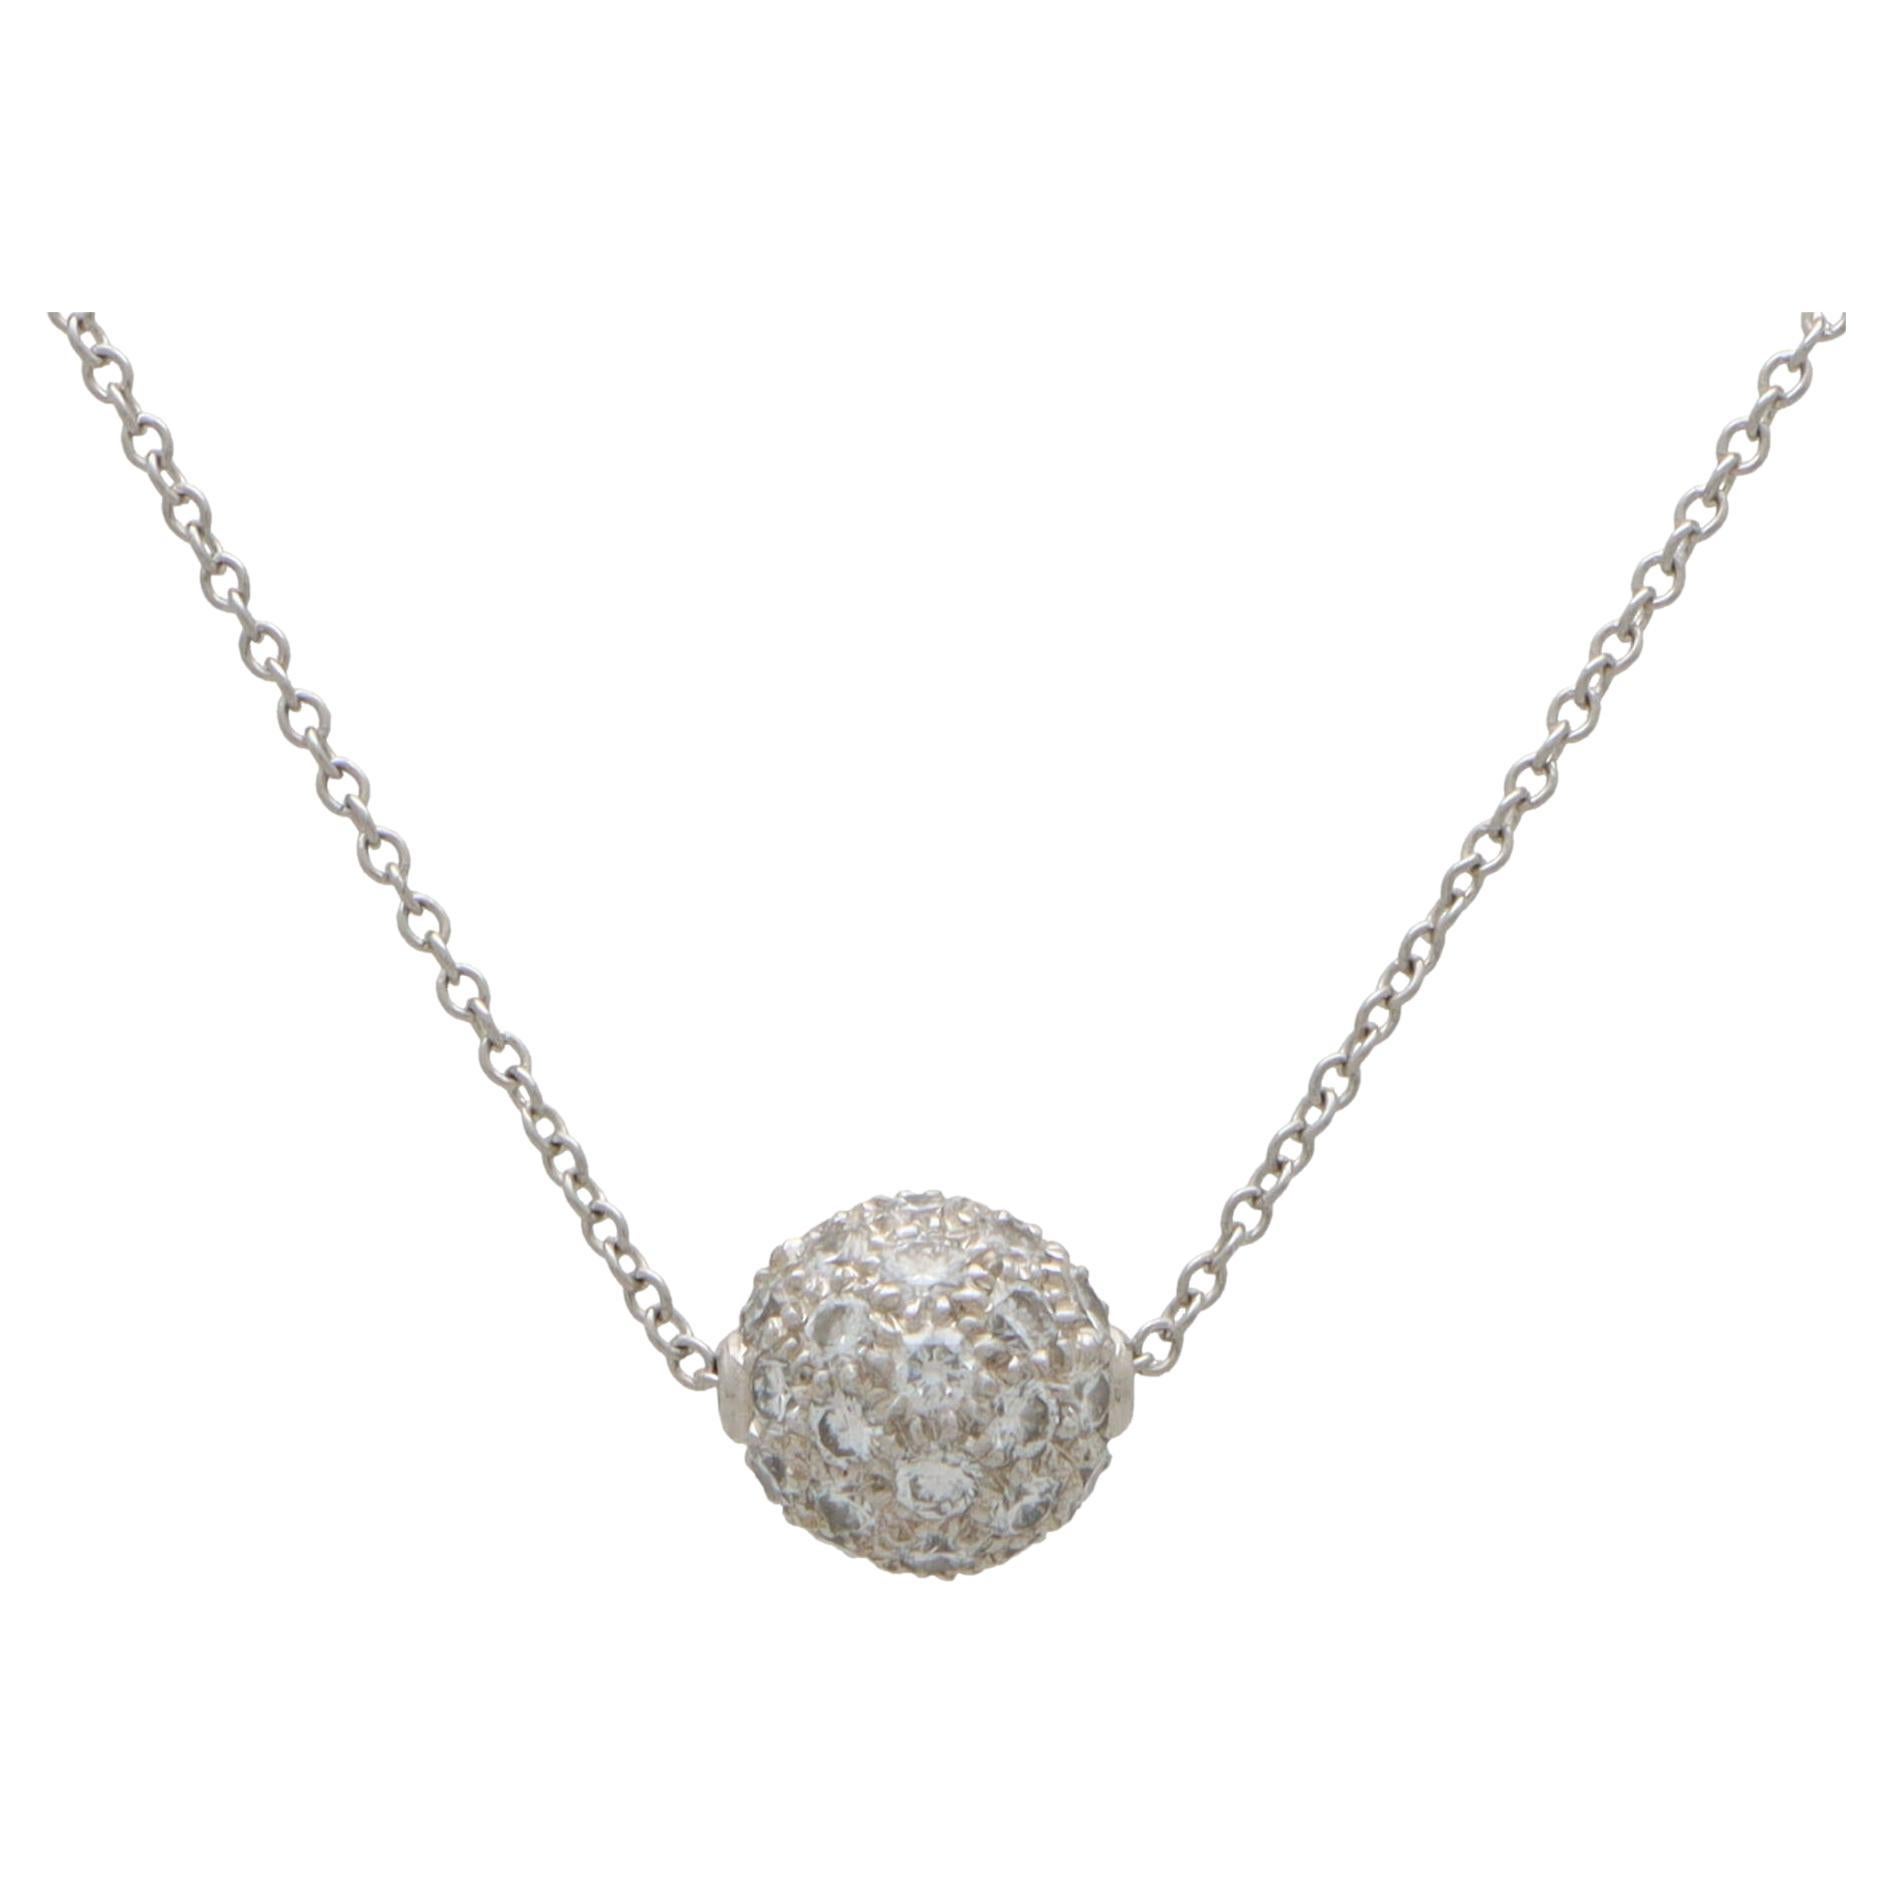 Vintage Tiffany & Co. Diamond Ball Pendant Necklace Set in Platinum